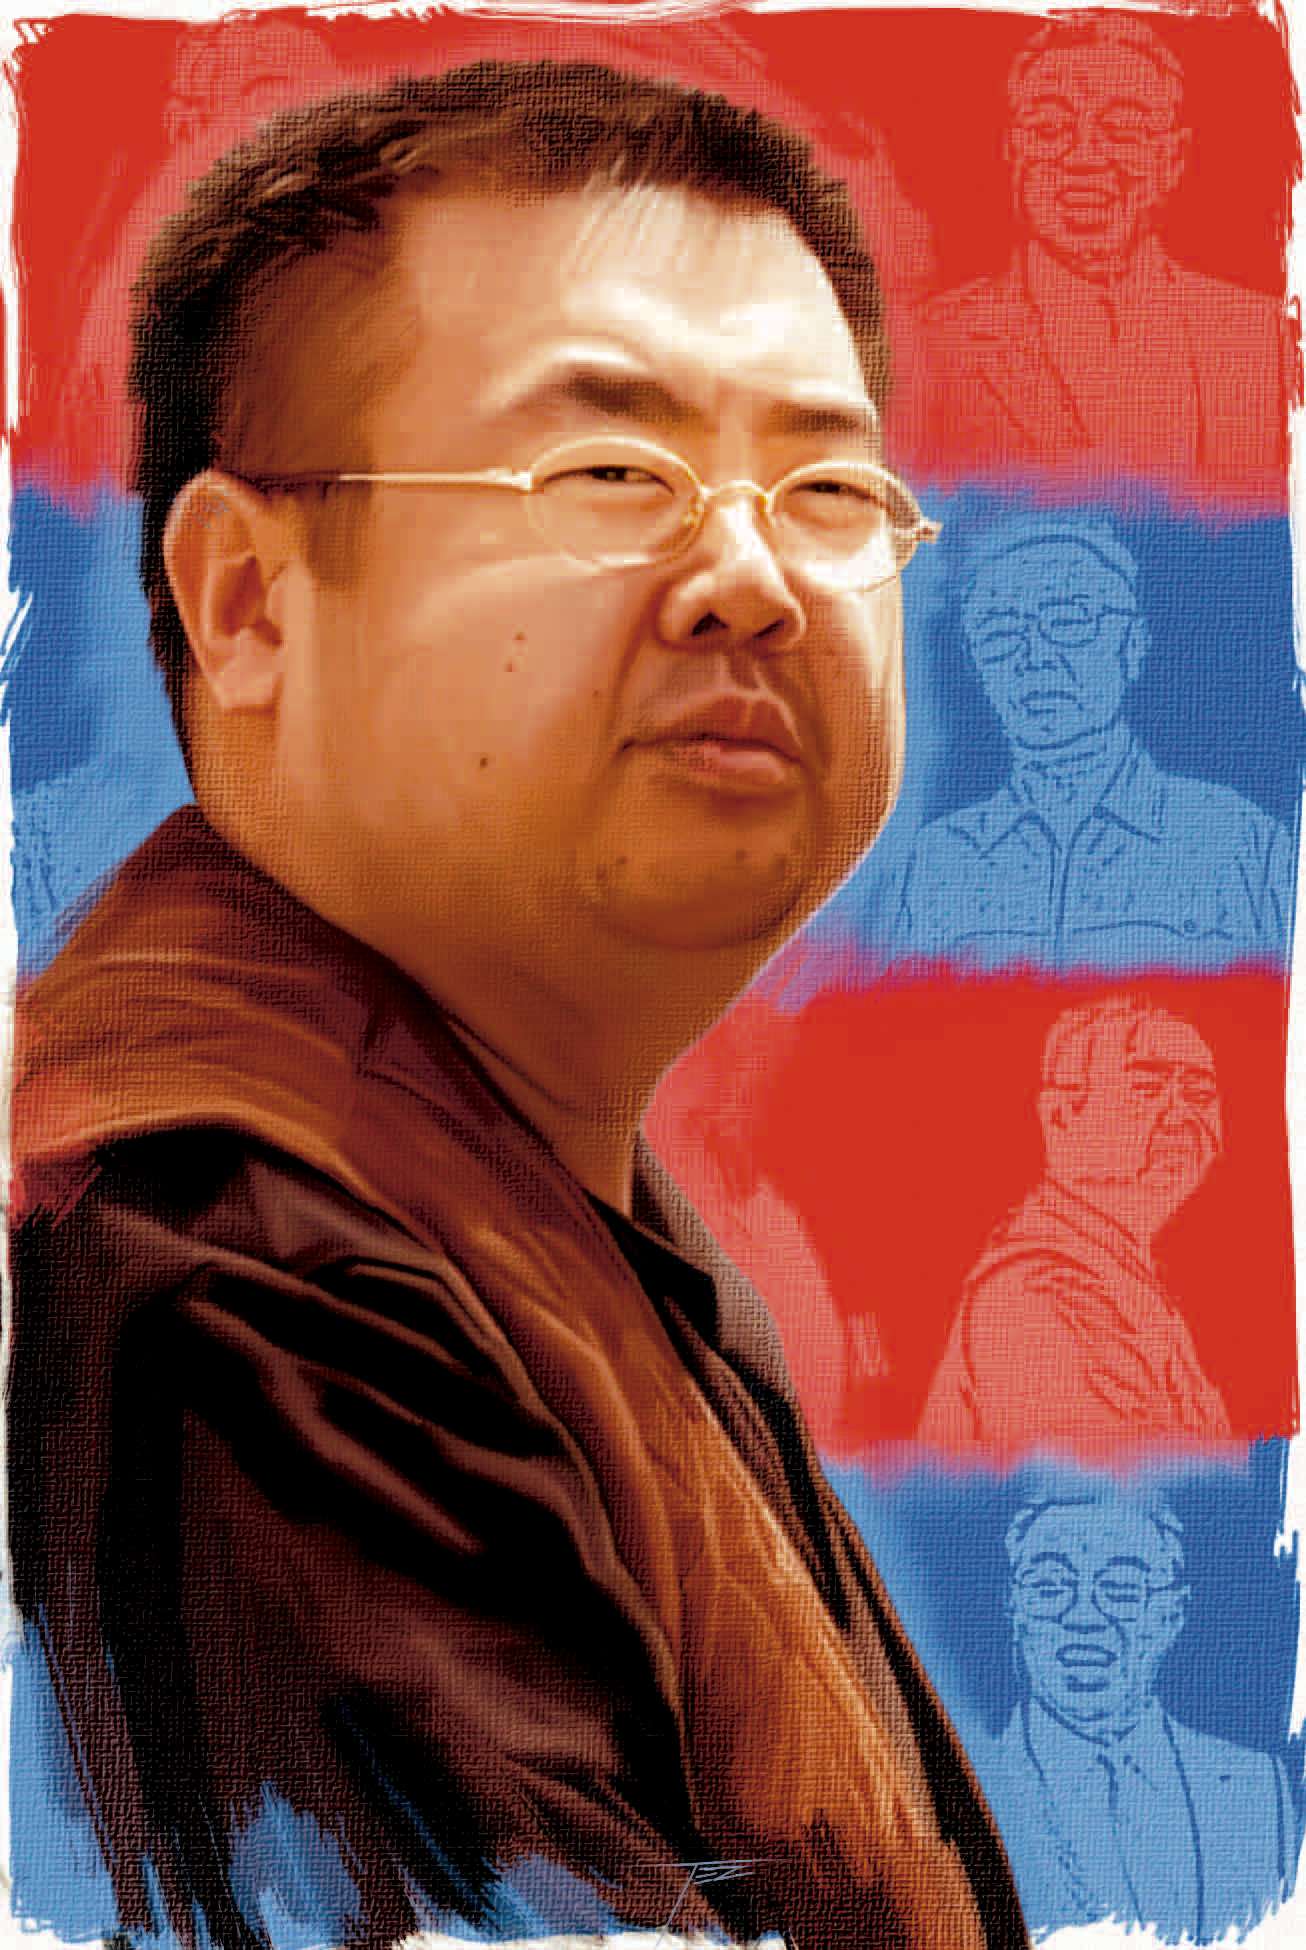 Illustration of Kim Jong-nam, the assassinated son of North Korea's former leader. llustration: Terry Pontikos